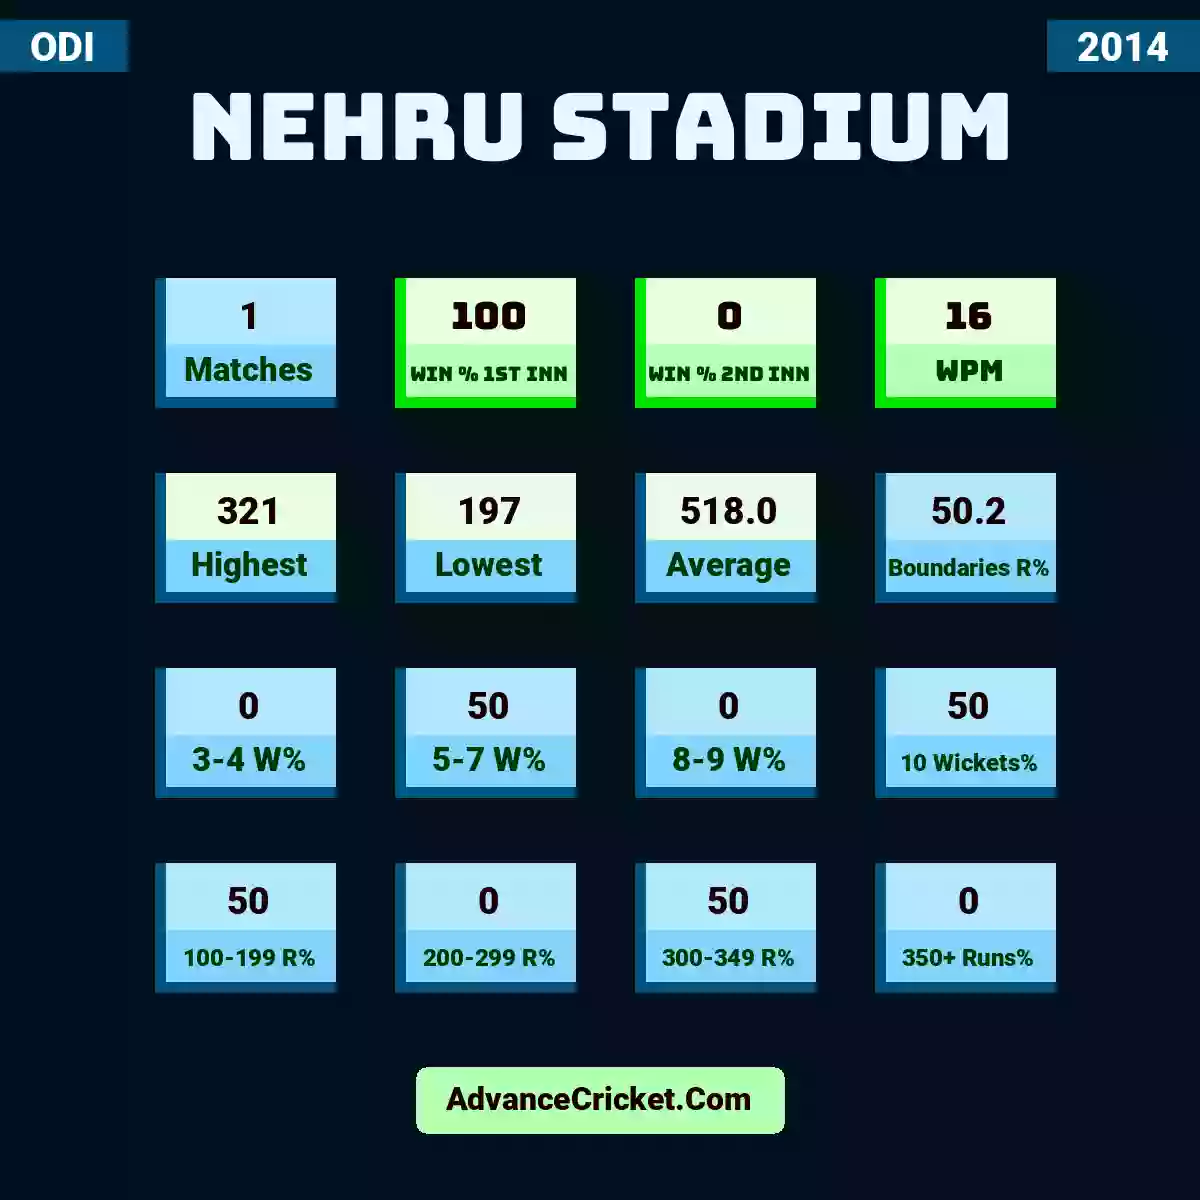 Image showing Nehru Stadium with Matches: 1, Win % 1st Inn: 100, Win % 2nd Inn: 0, WPM: 16, Highest: 321, Lowest: 197, Average: 518.0, Boundaries R%: 50.2, 3-4 W%: 0, 5-7 W%: 50, 8-9 W%: 0, 10 Wickets%: 50, 100-199 R%: 50, 200-299 R%: 0, 300-349 R%: 50, 350+ Runs%: 0.